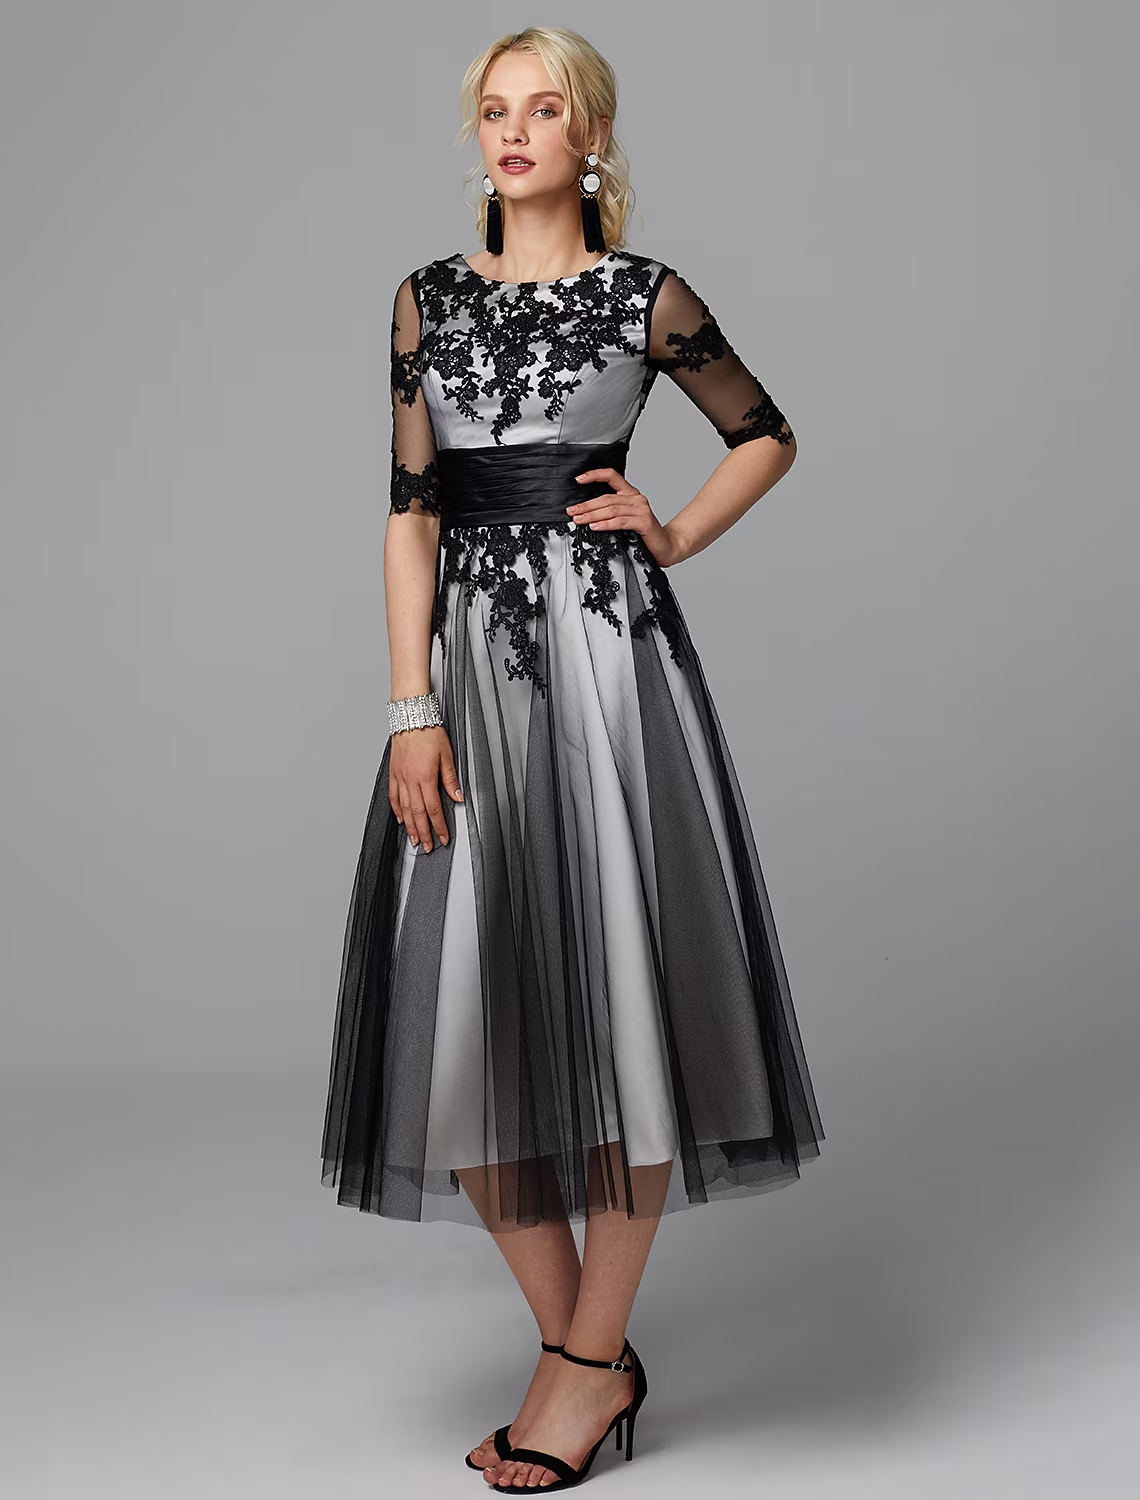 A-Line Vintage Dress Wedding Guest Tea Length Half Sleeve Jewel Neck Lace with Sash Ribbon Appliques